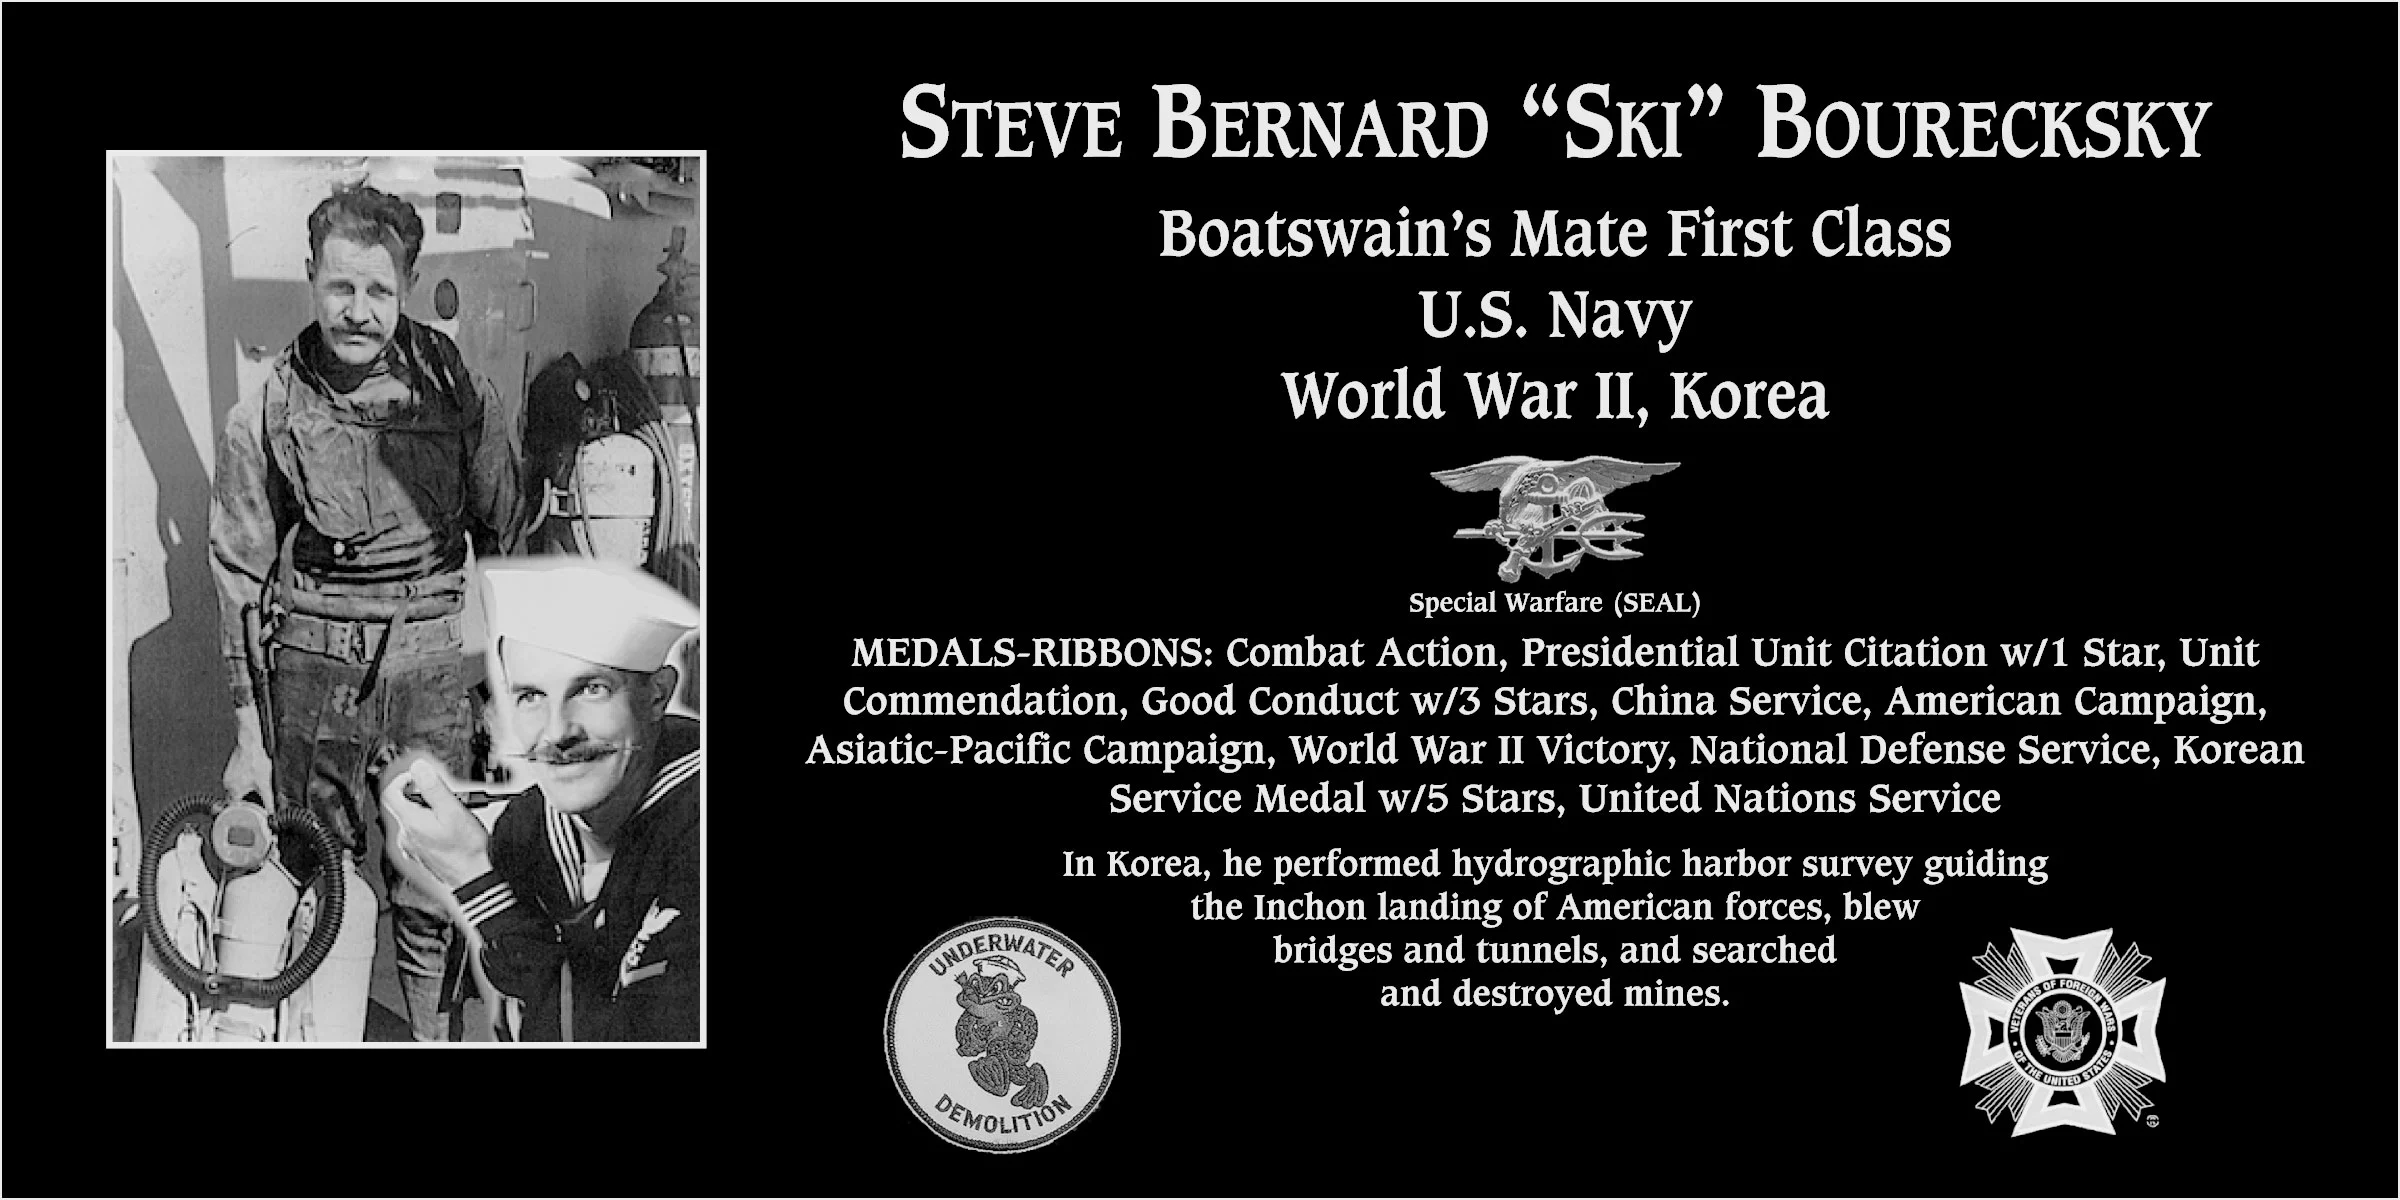 Steve Bernard “Ski” Bourecksky